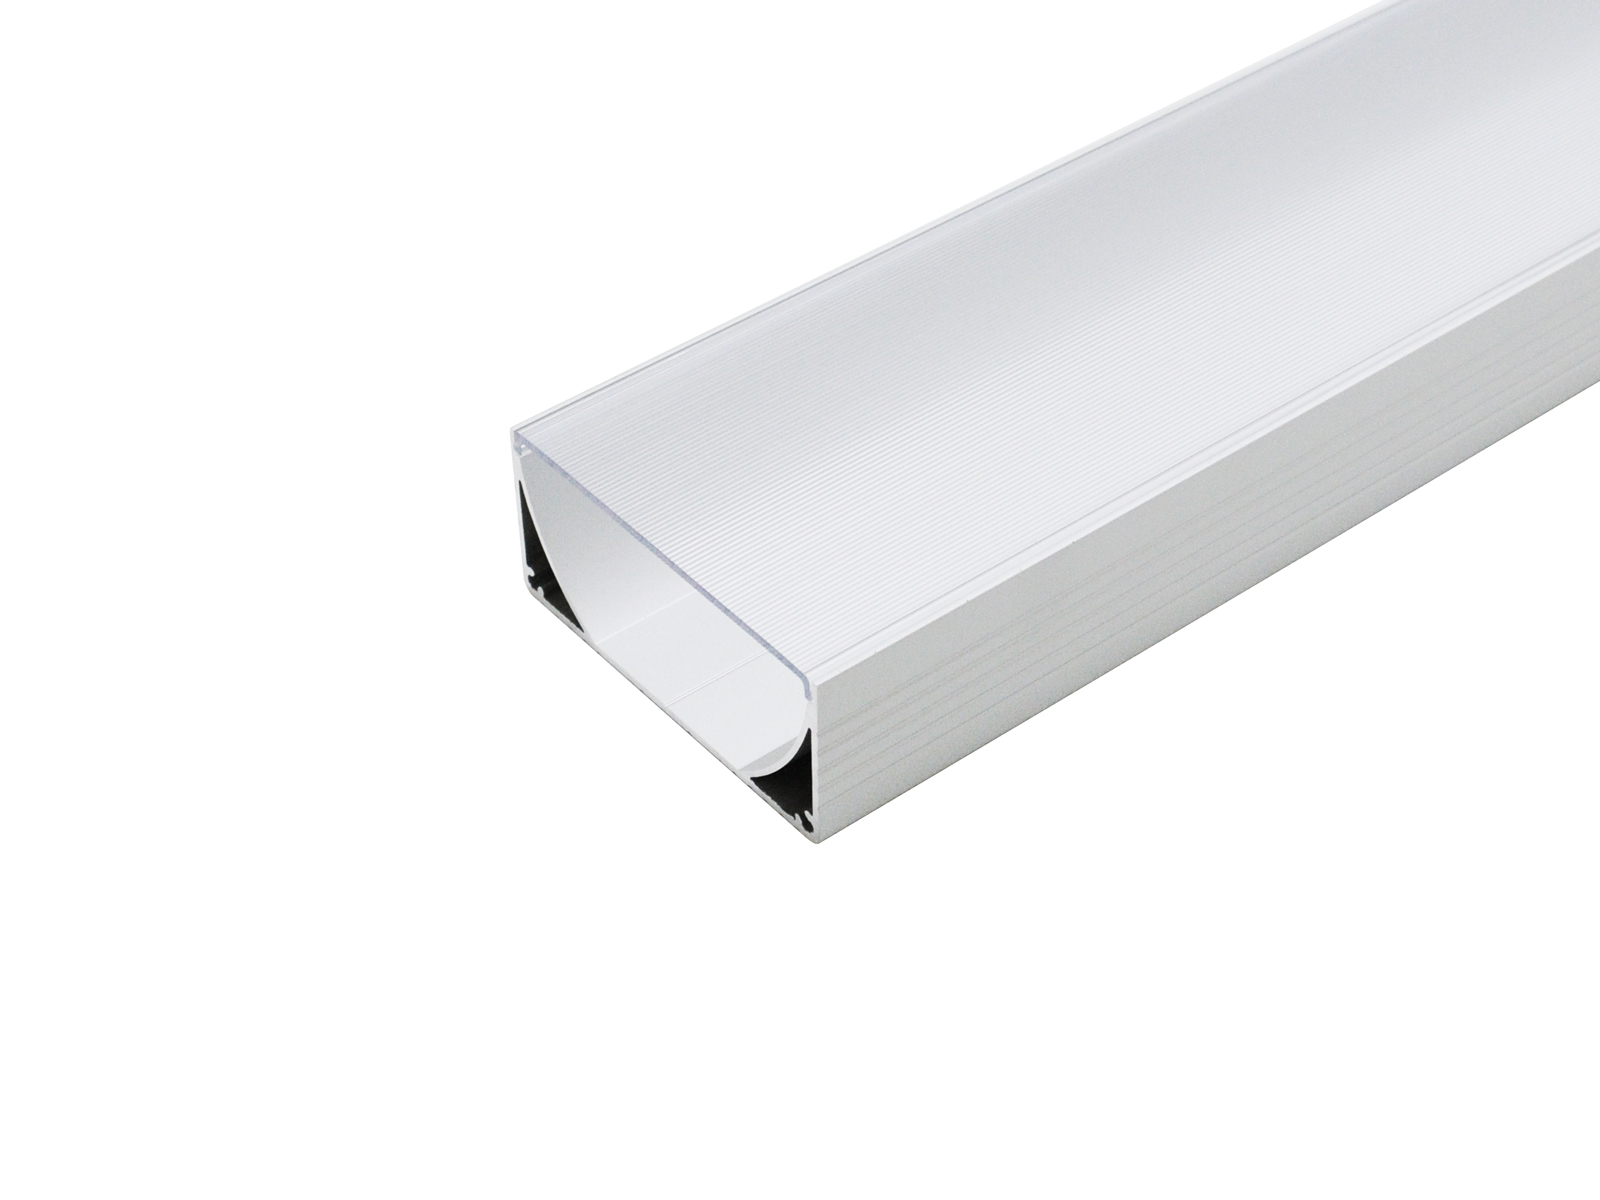 LED Alu U-Profil 80mm silber mit Abdeckung 2m kaufen | PUR-LED